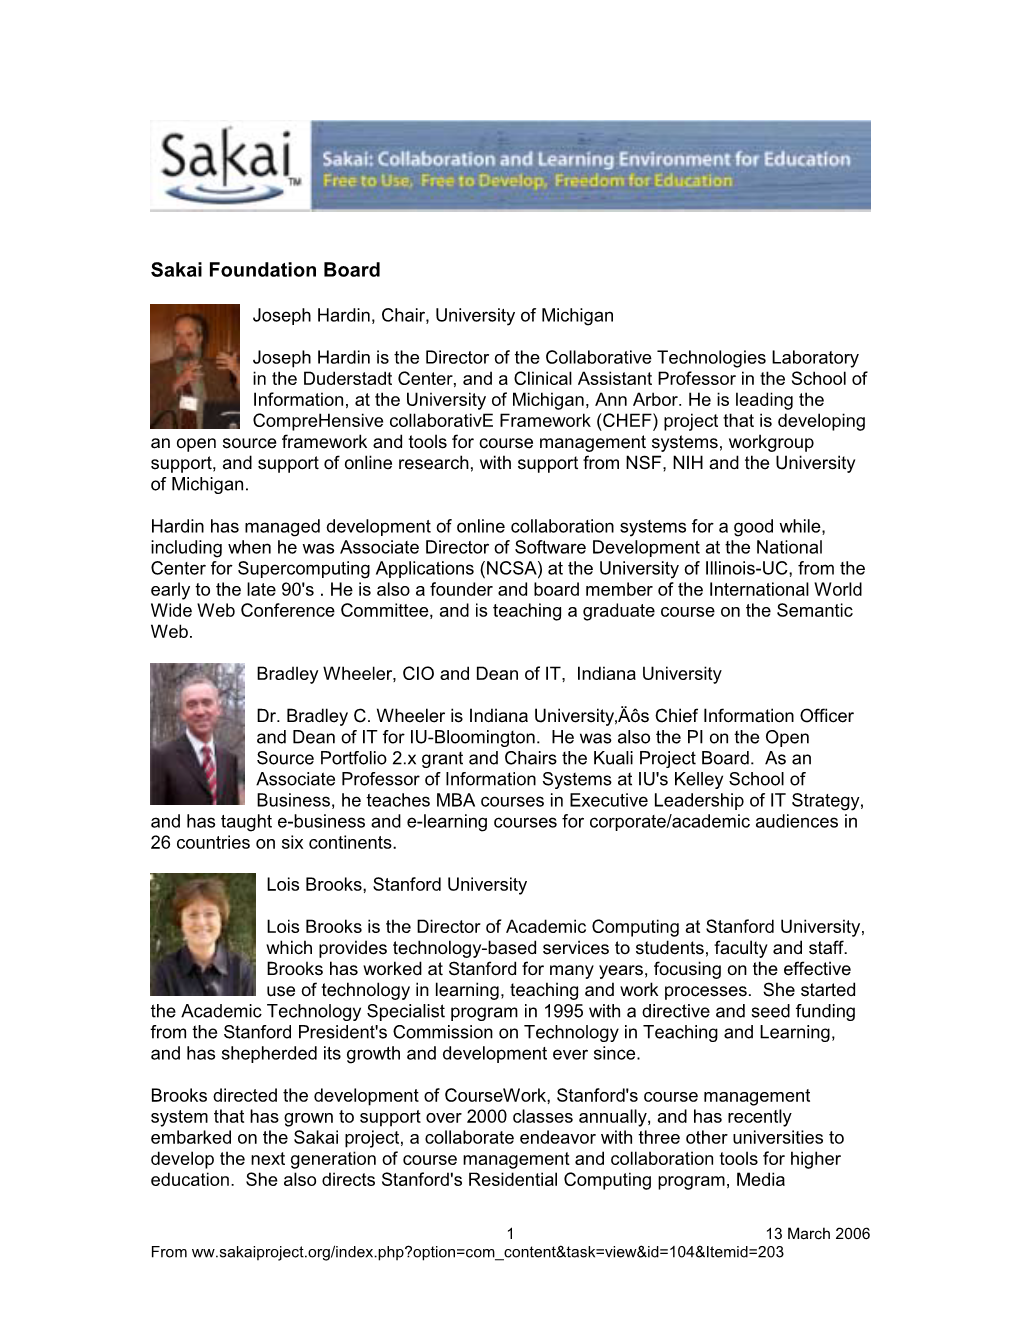 Sakai Board, Staff, Institutional Representatives and Community